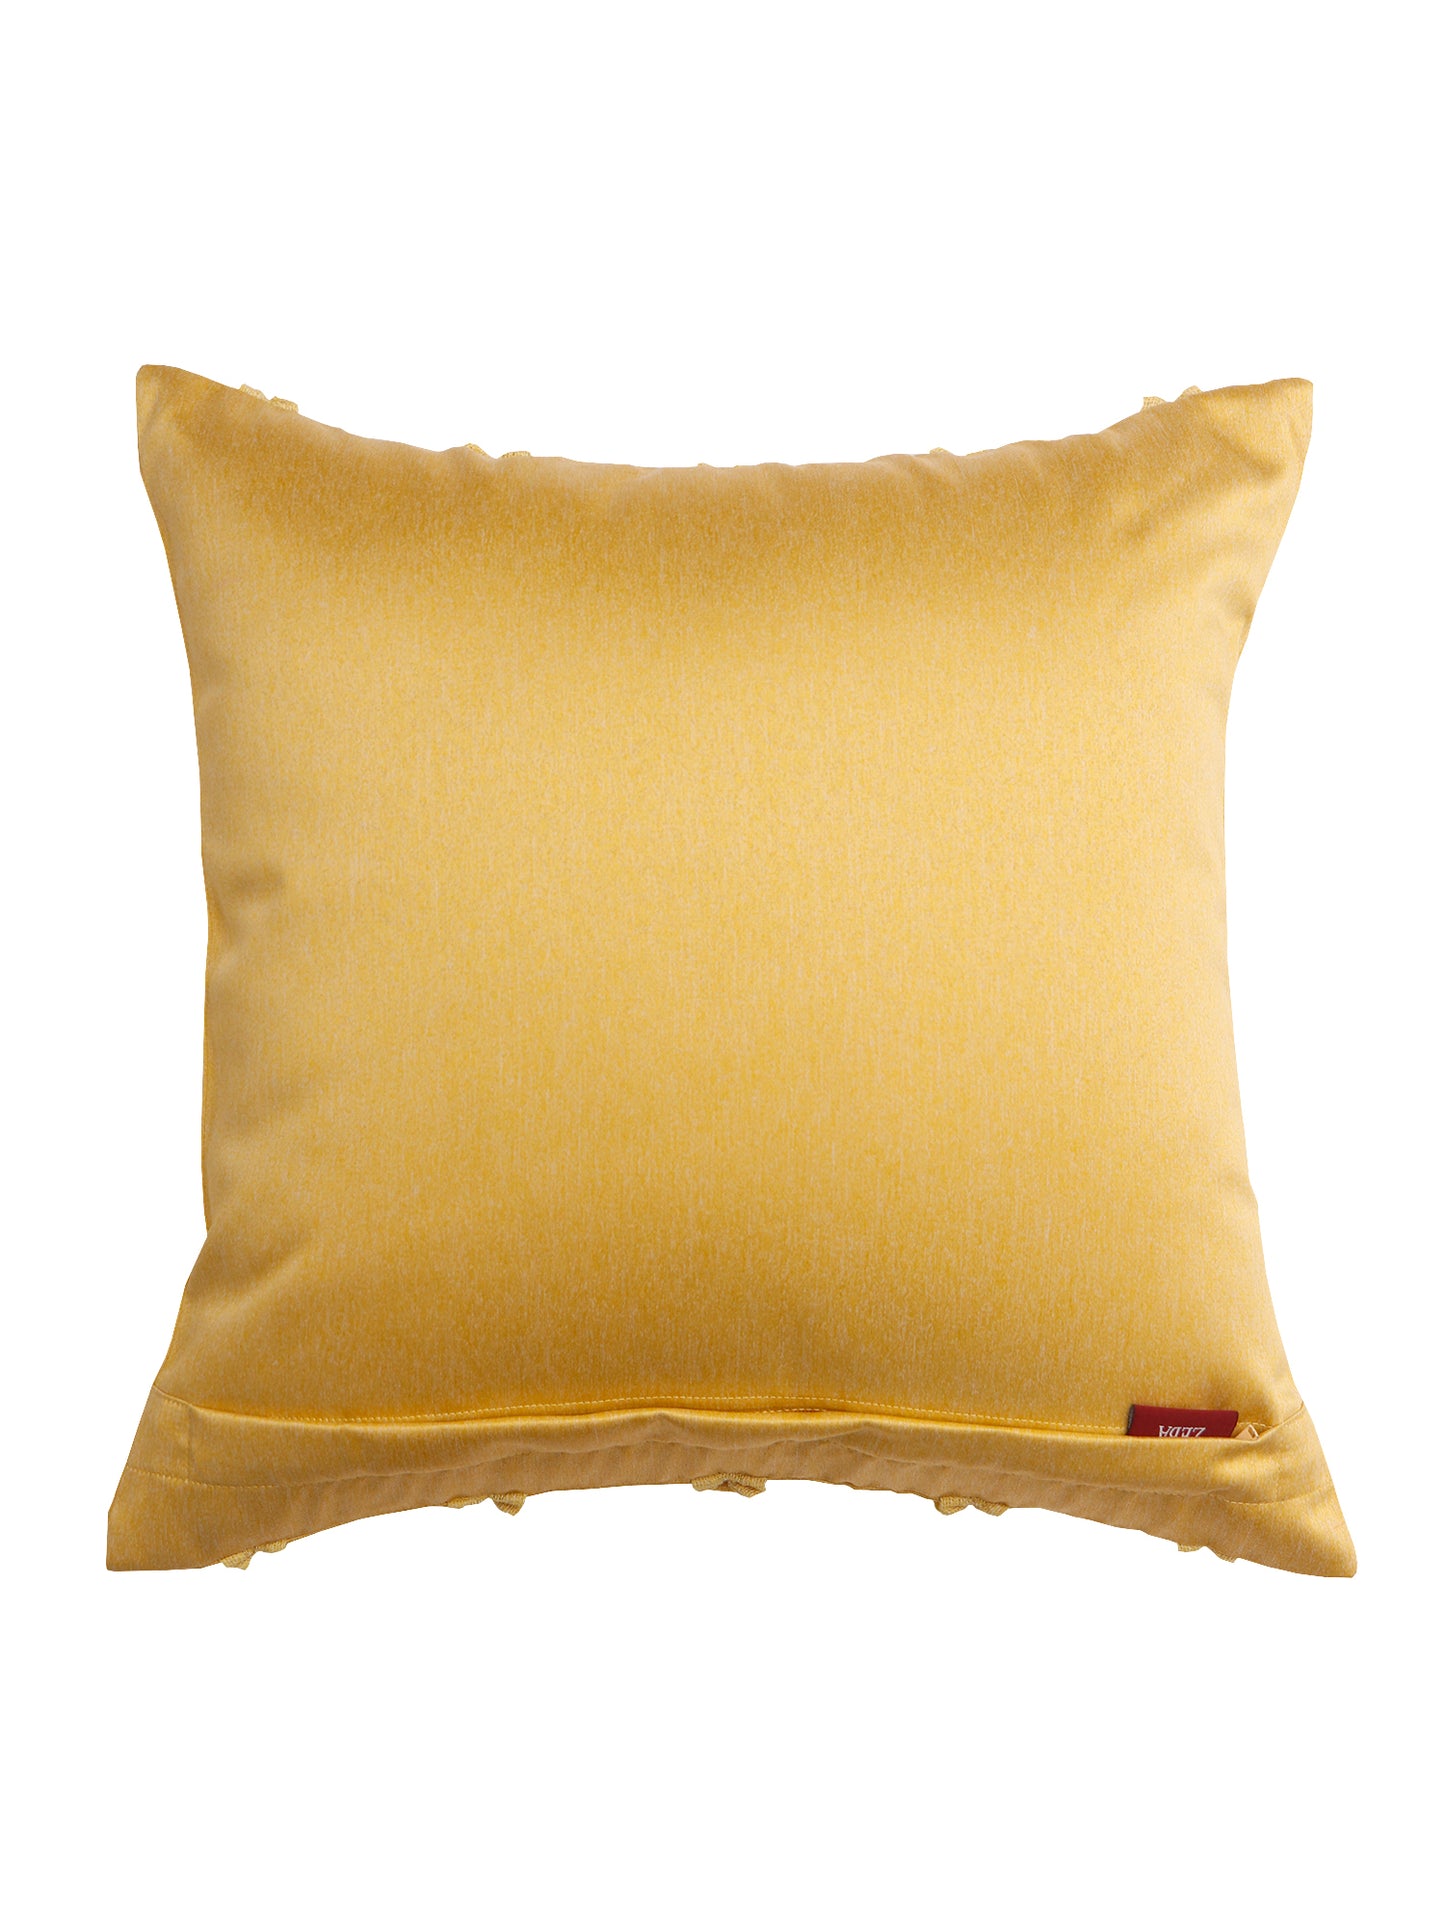 Cushion Cover Technique Ruffles Yellow - 16" x 16"